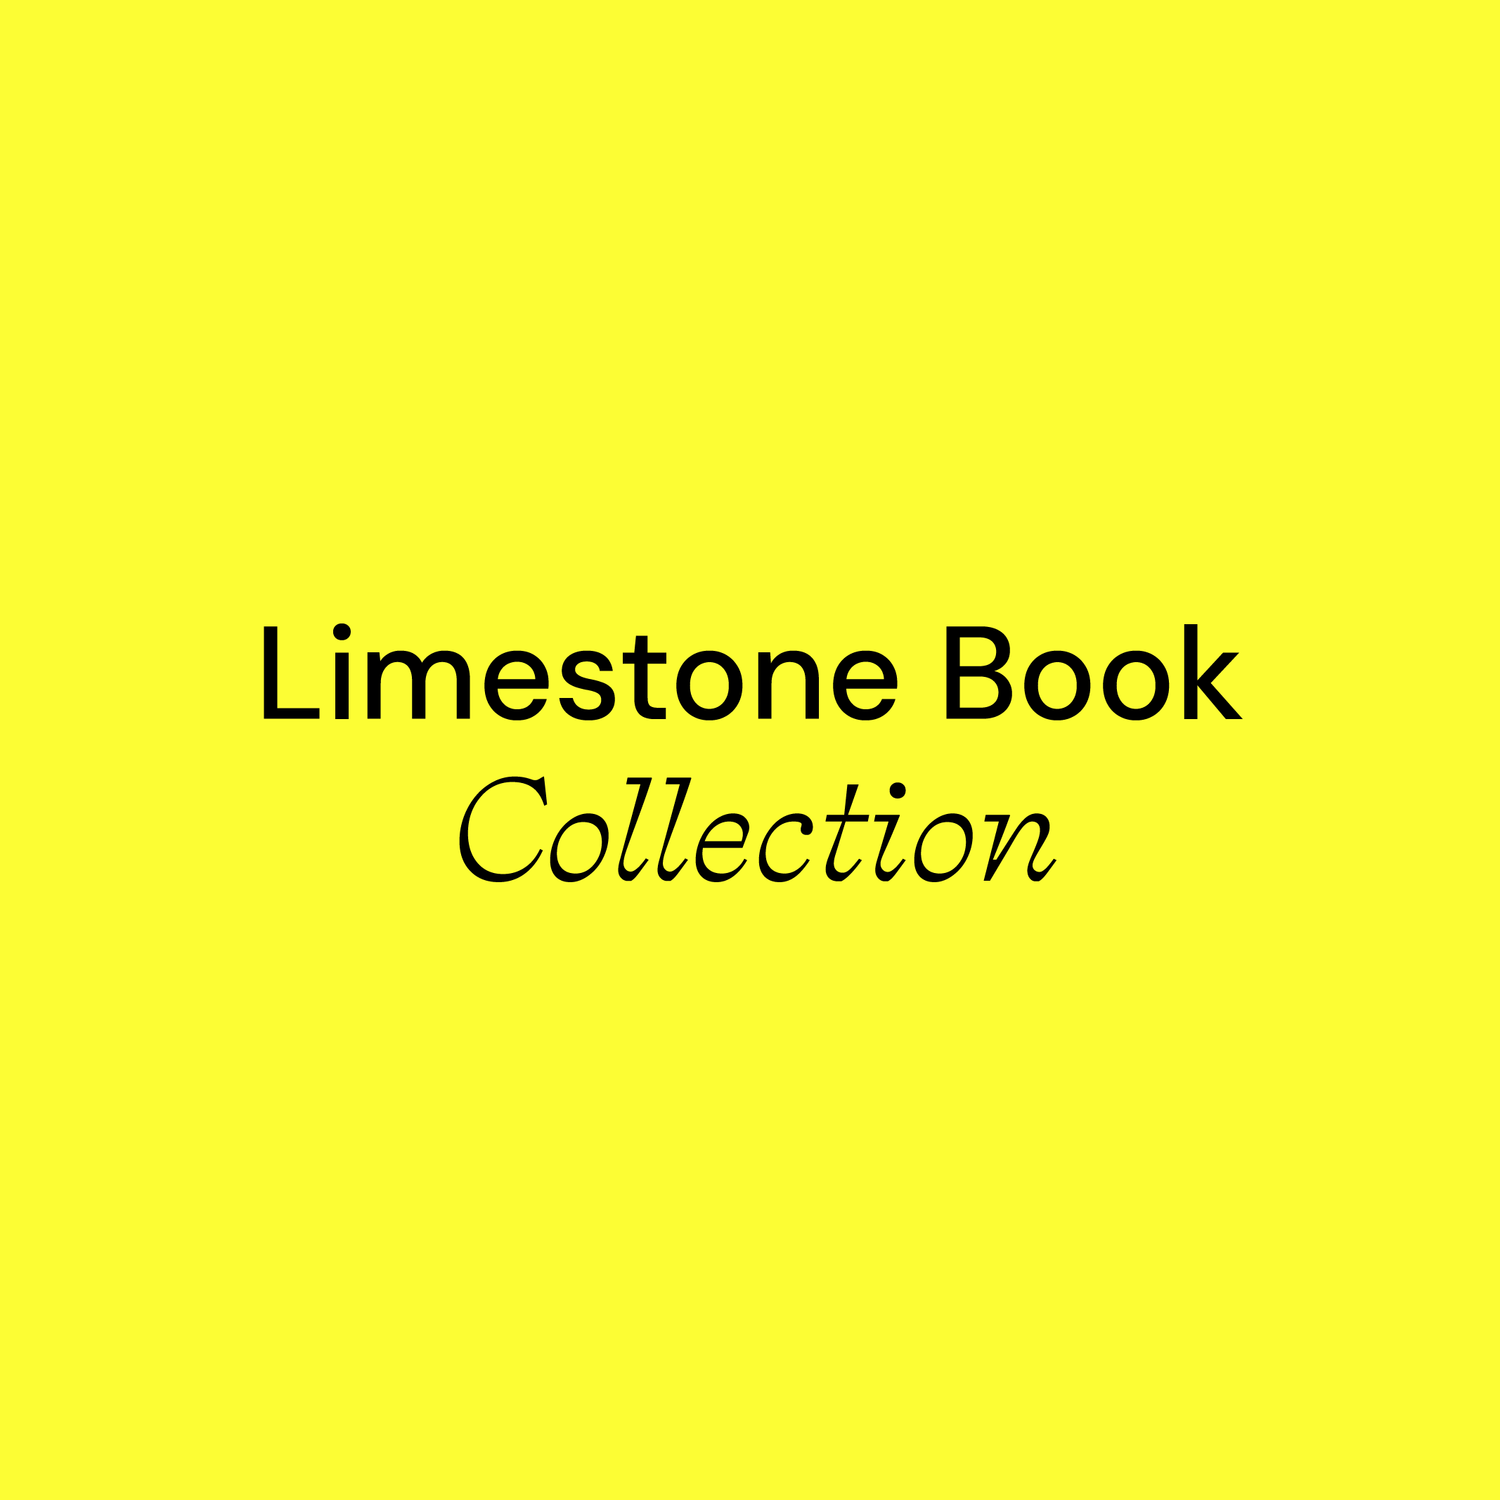 Limestone Collection